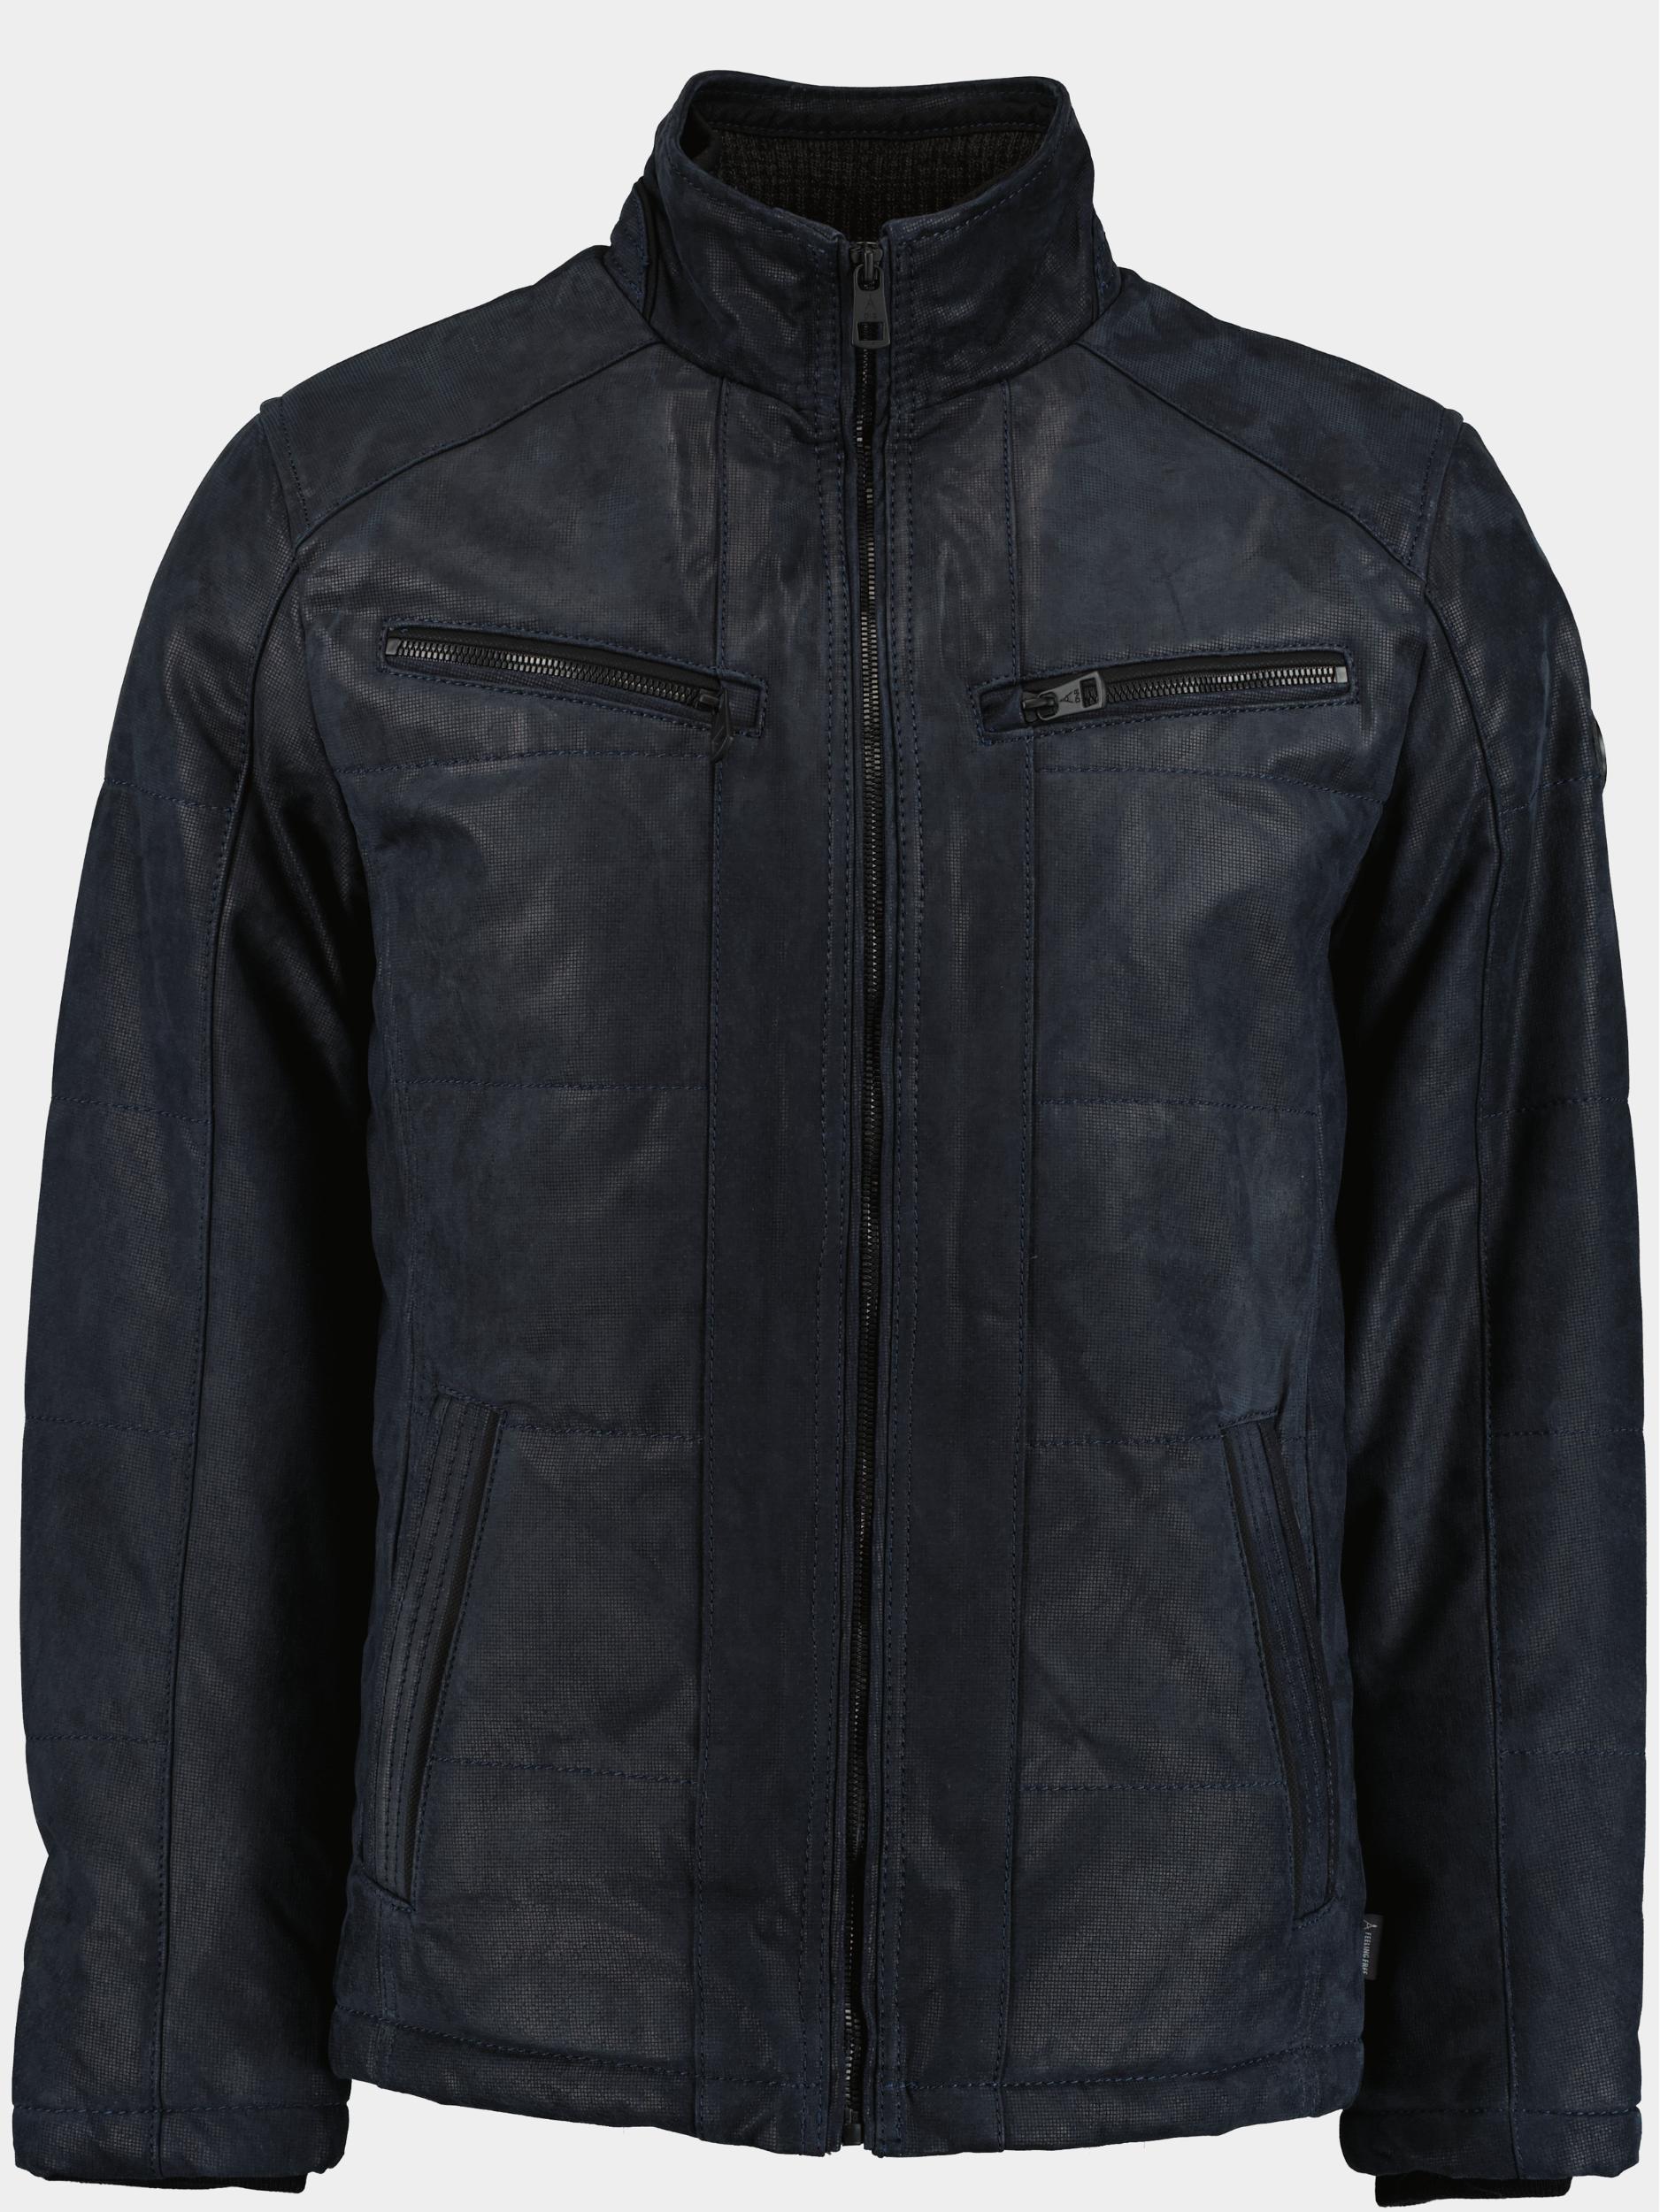 Donders 1860 Lederen Jack Blauw Leather Jacket 42770/880